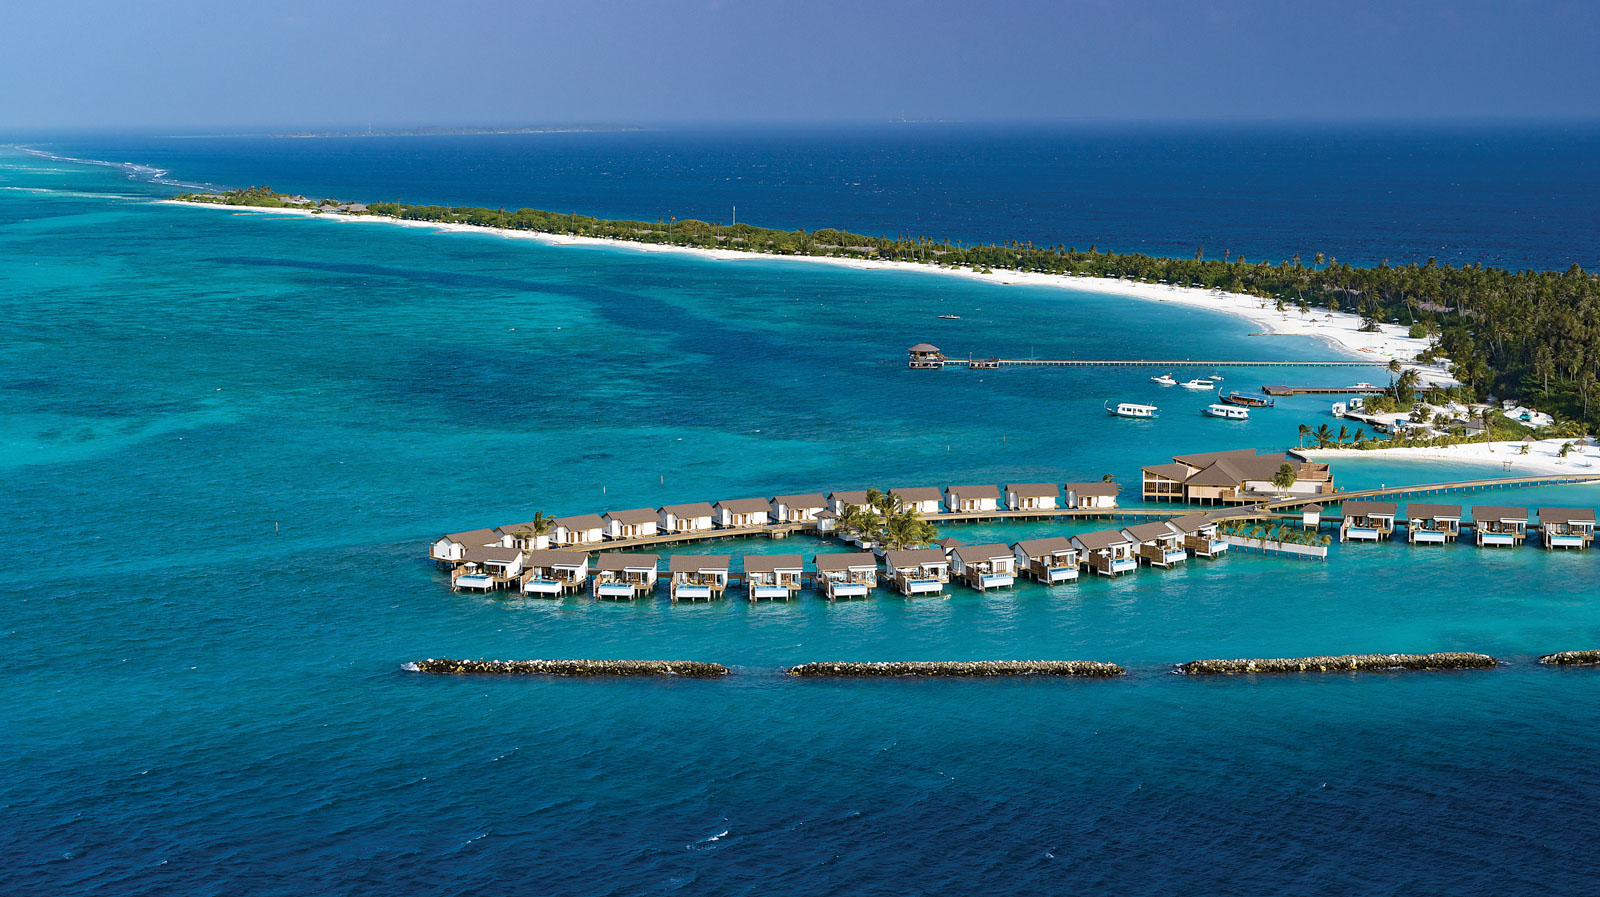 ATMOSPHERE KANIFUSHI MALDIVES - AERIALS AND GENERIC - Full Island View 01 - 02_2020